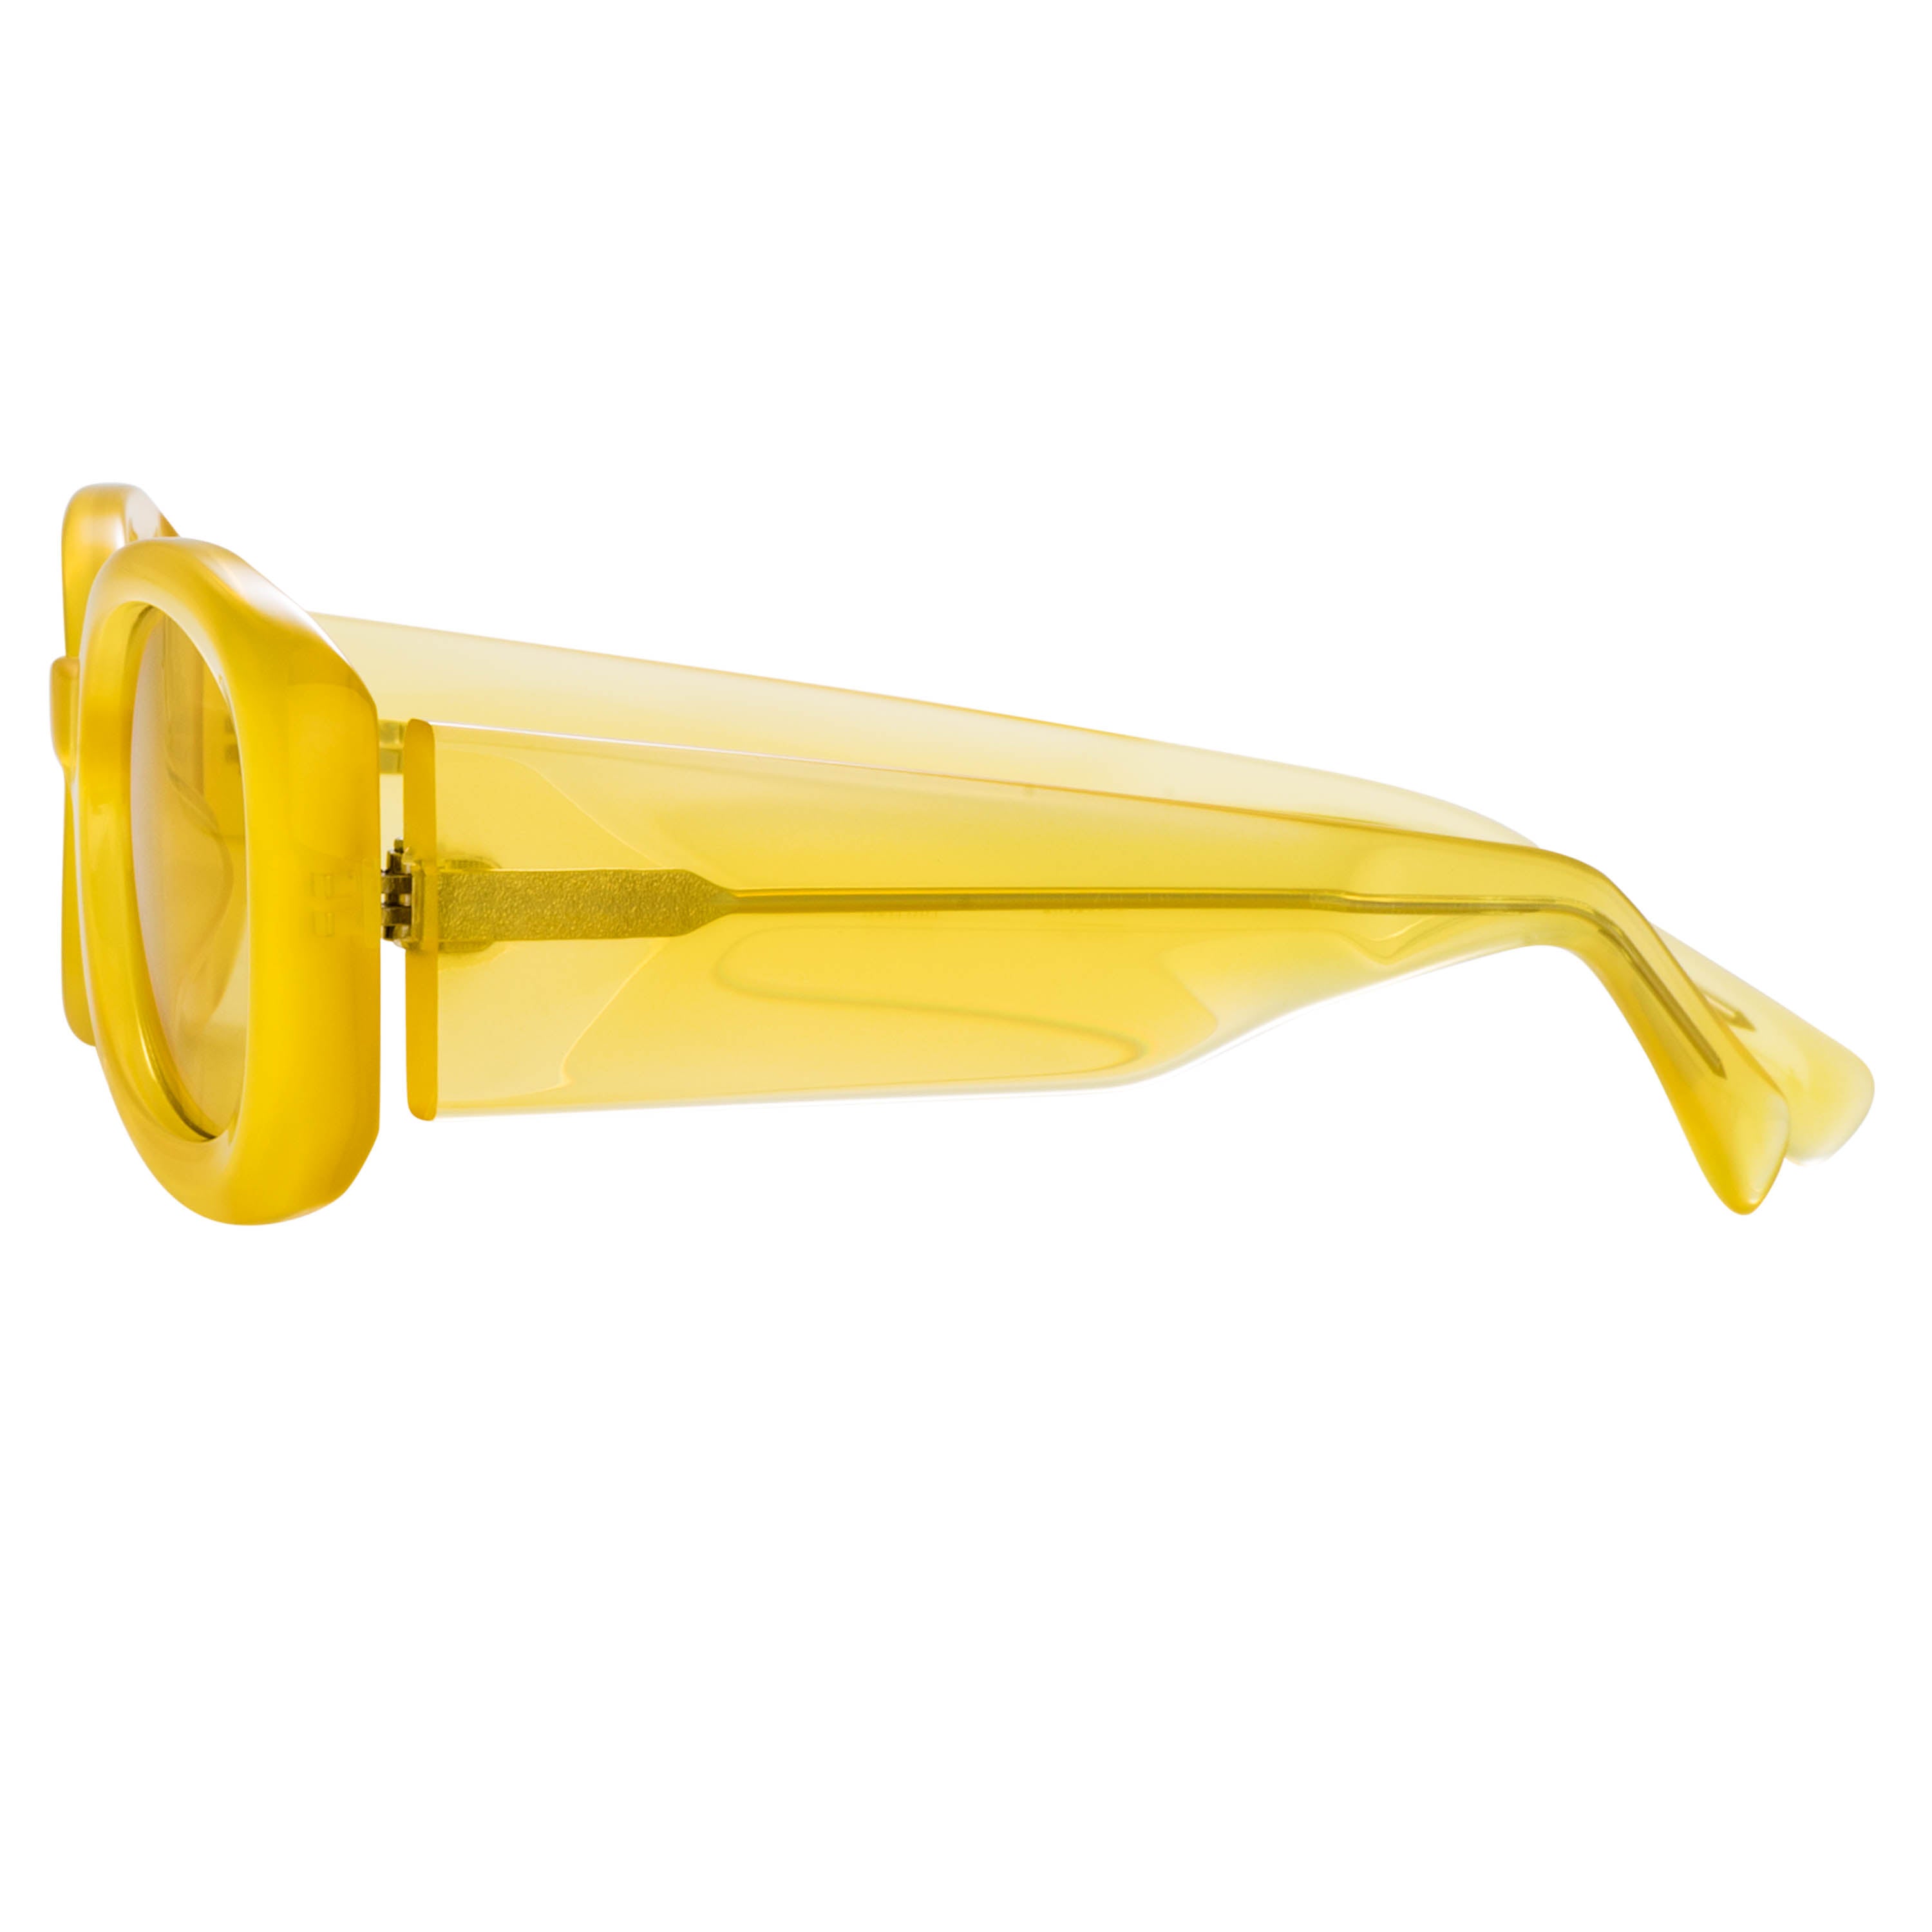 Dries van Noten 204 Aviator Sunglasses in Yellow by LINDA FARROW